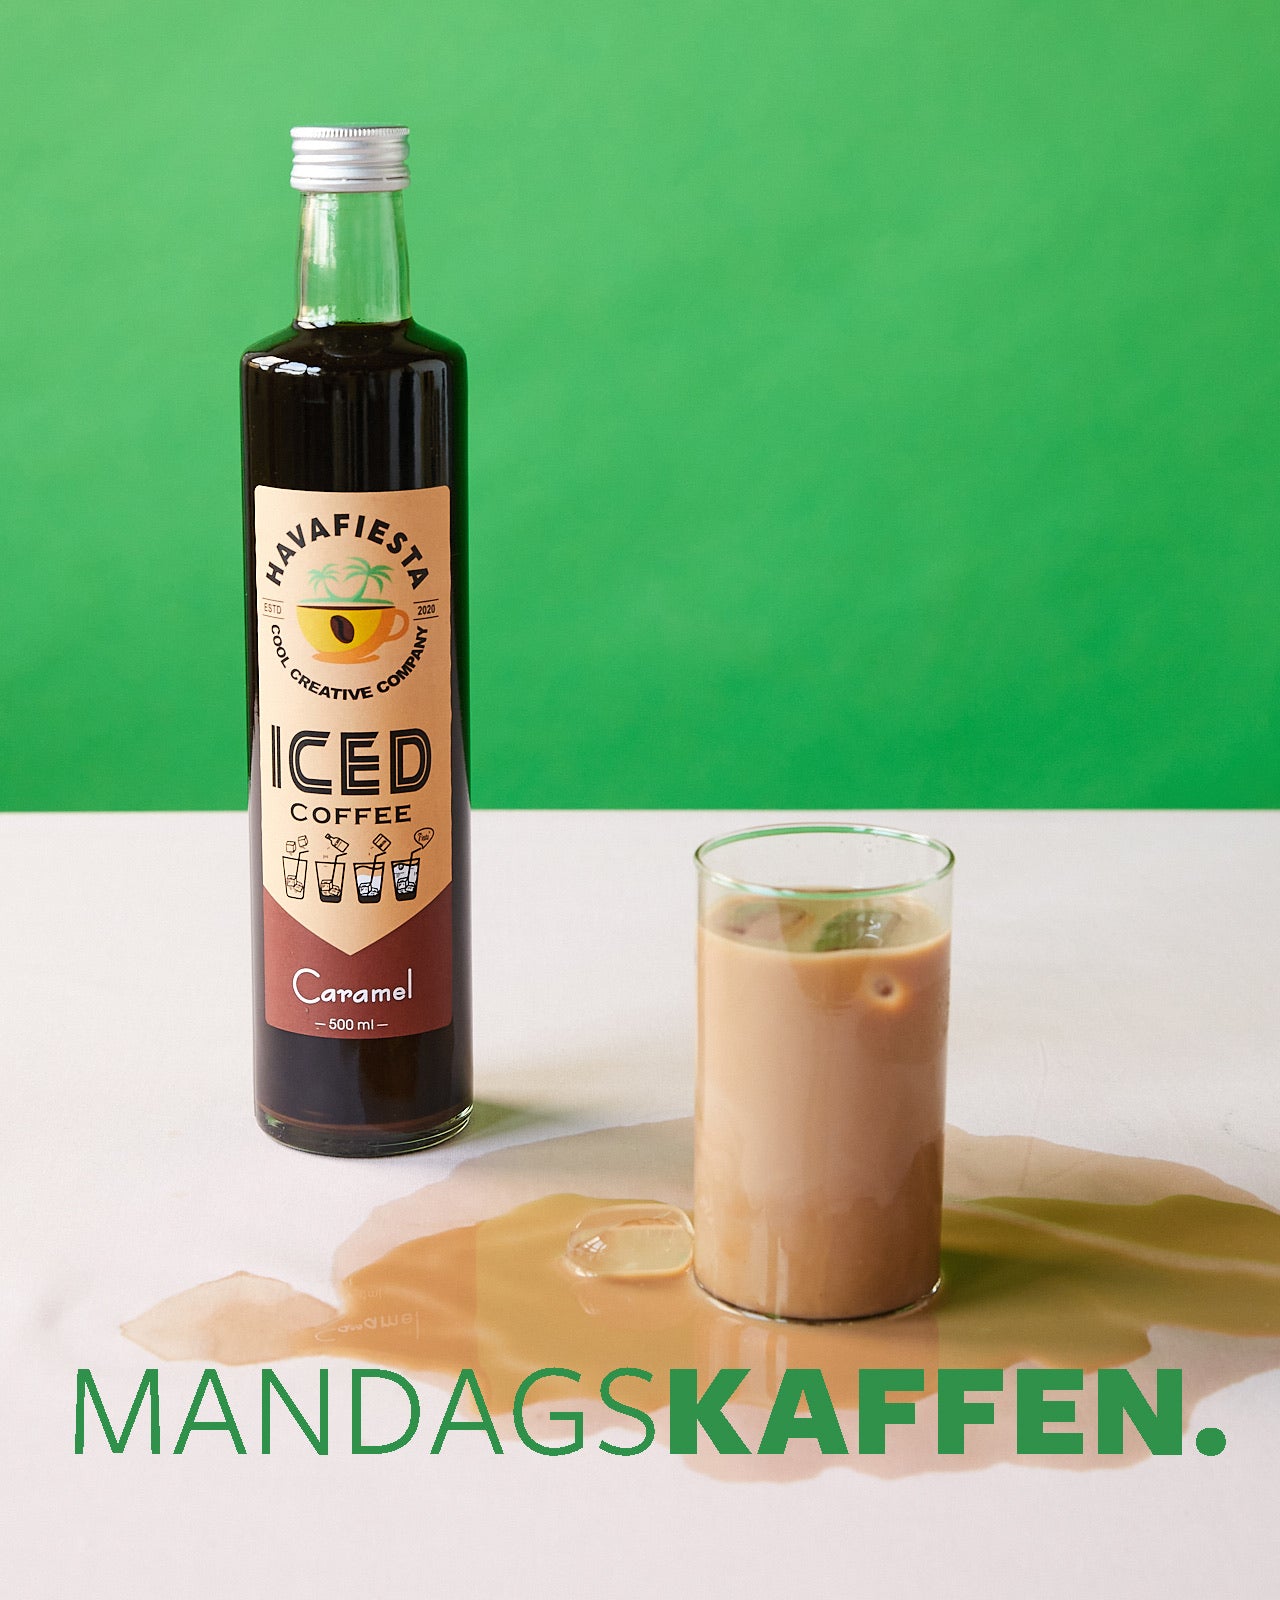 Iced Coffee - Caramel